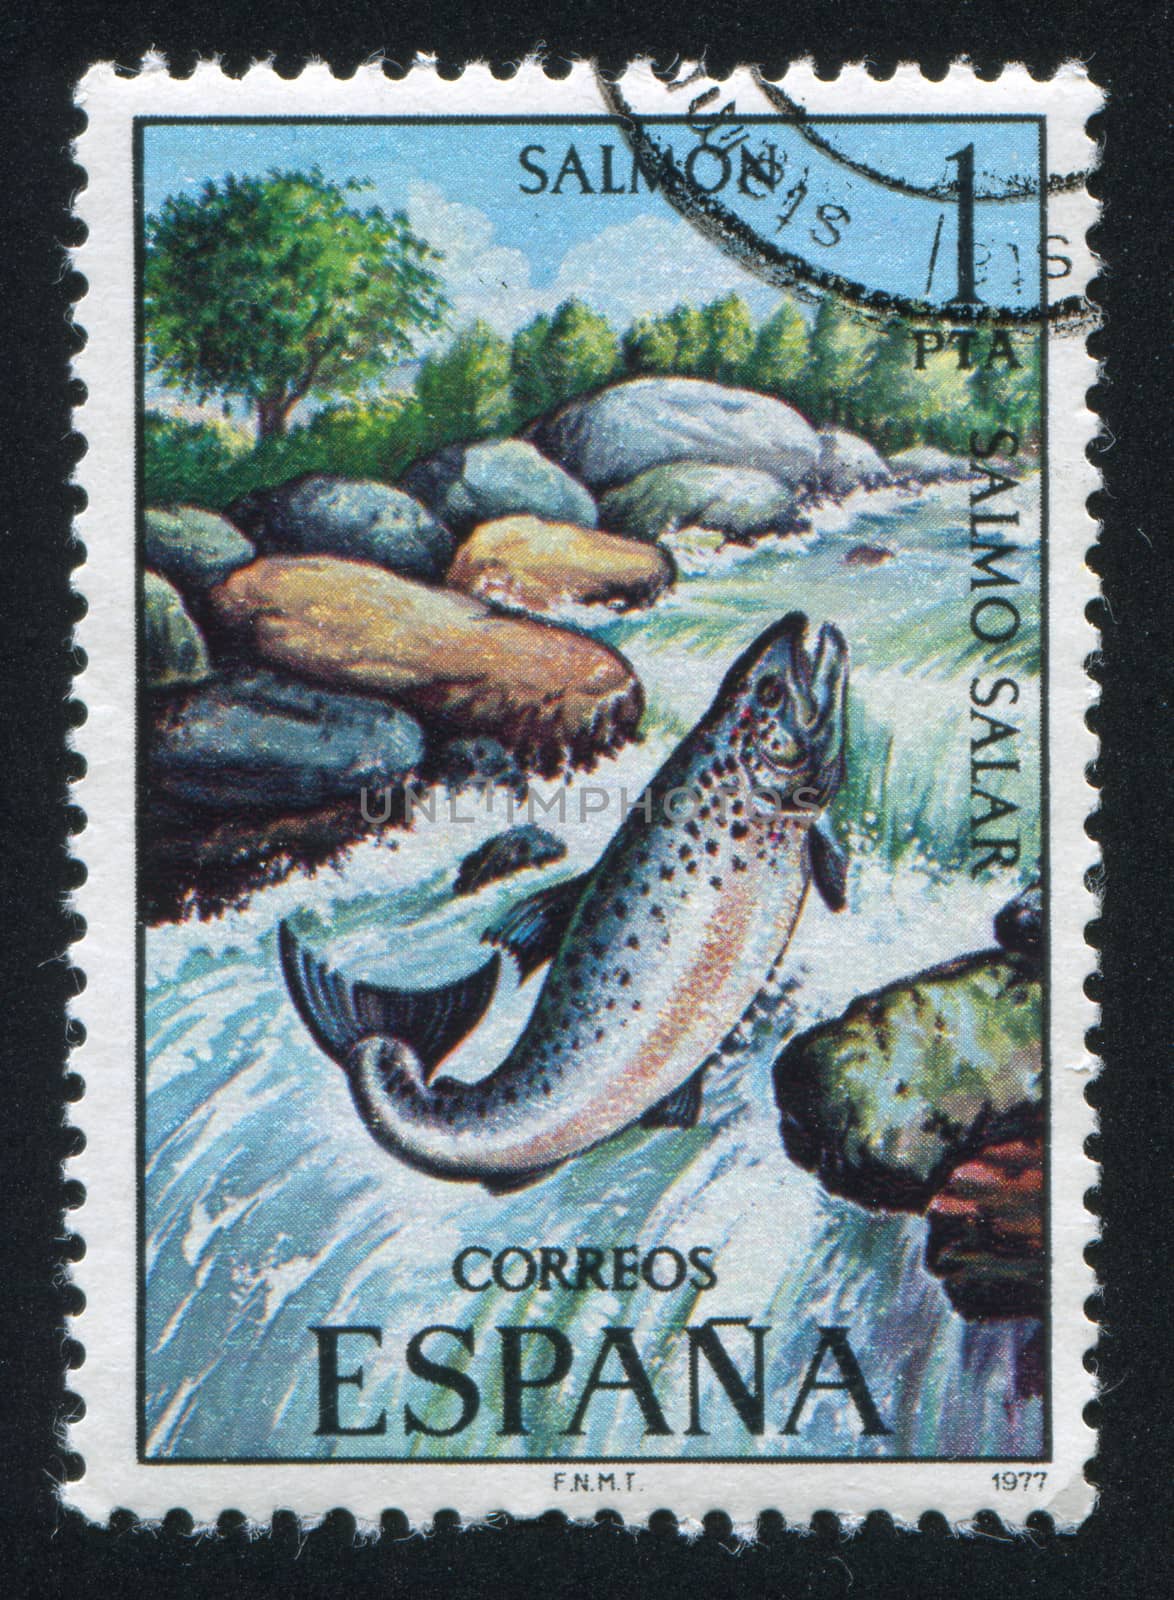 SPAIN - CIRCA 1977: stamp printed by Spain, shows Salmon, circa 1977